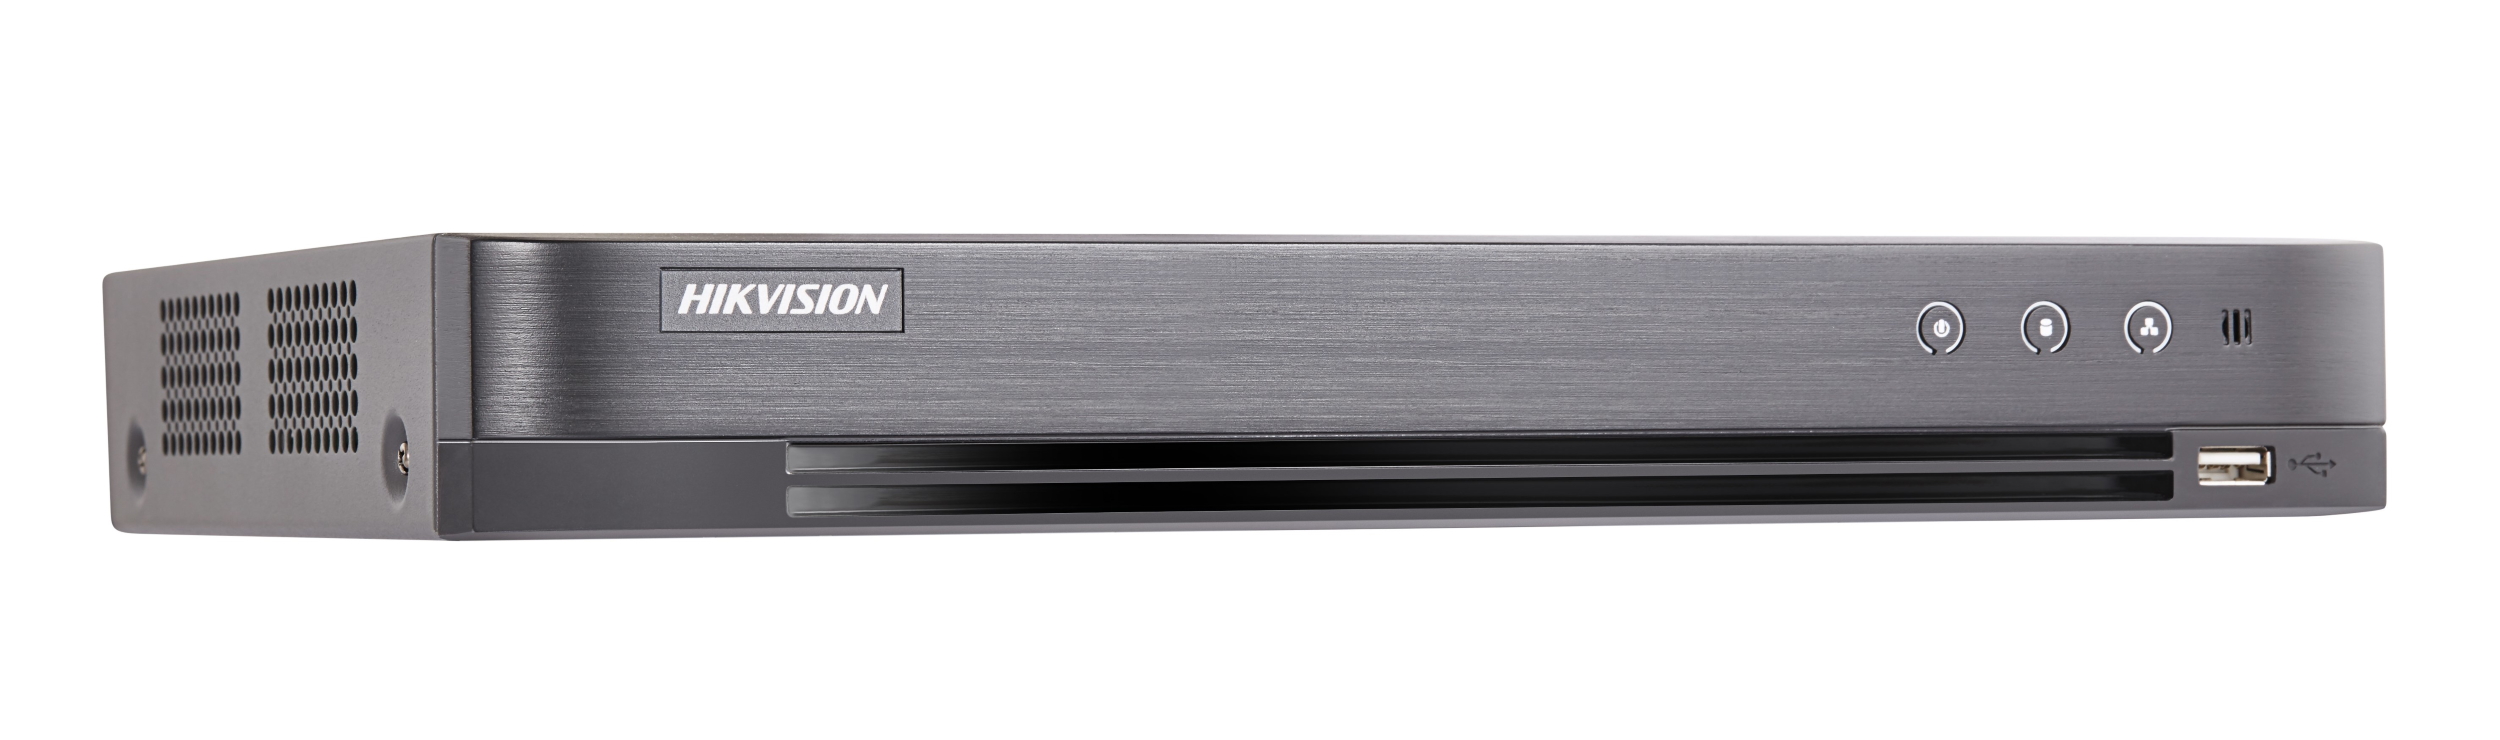 20000856 Hikvision DVR Turbo HD Acusense, 8-canaux, Tribride, Alarme